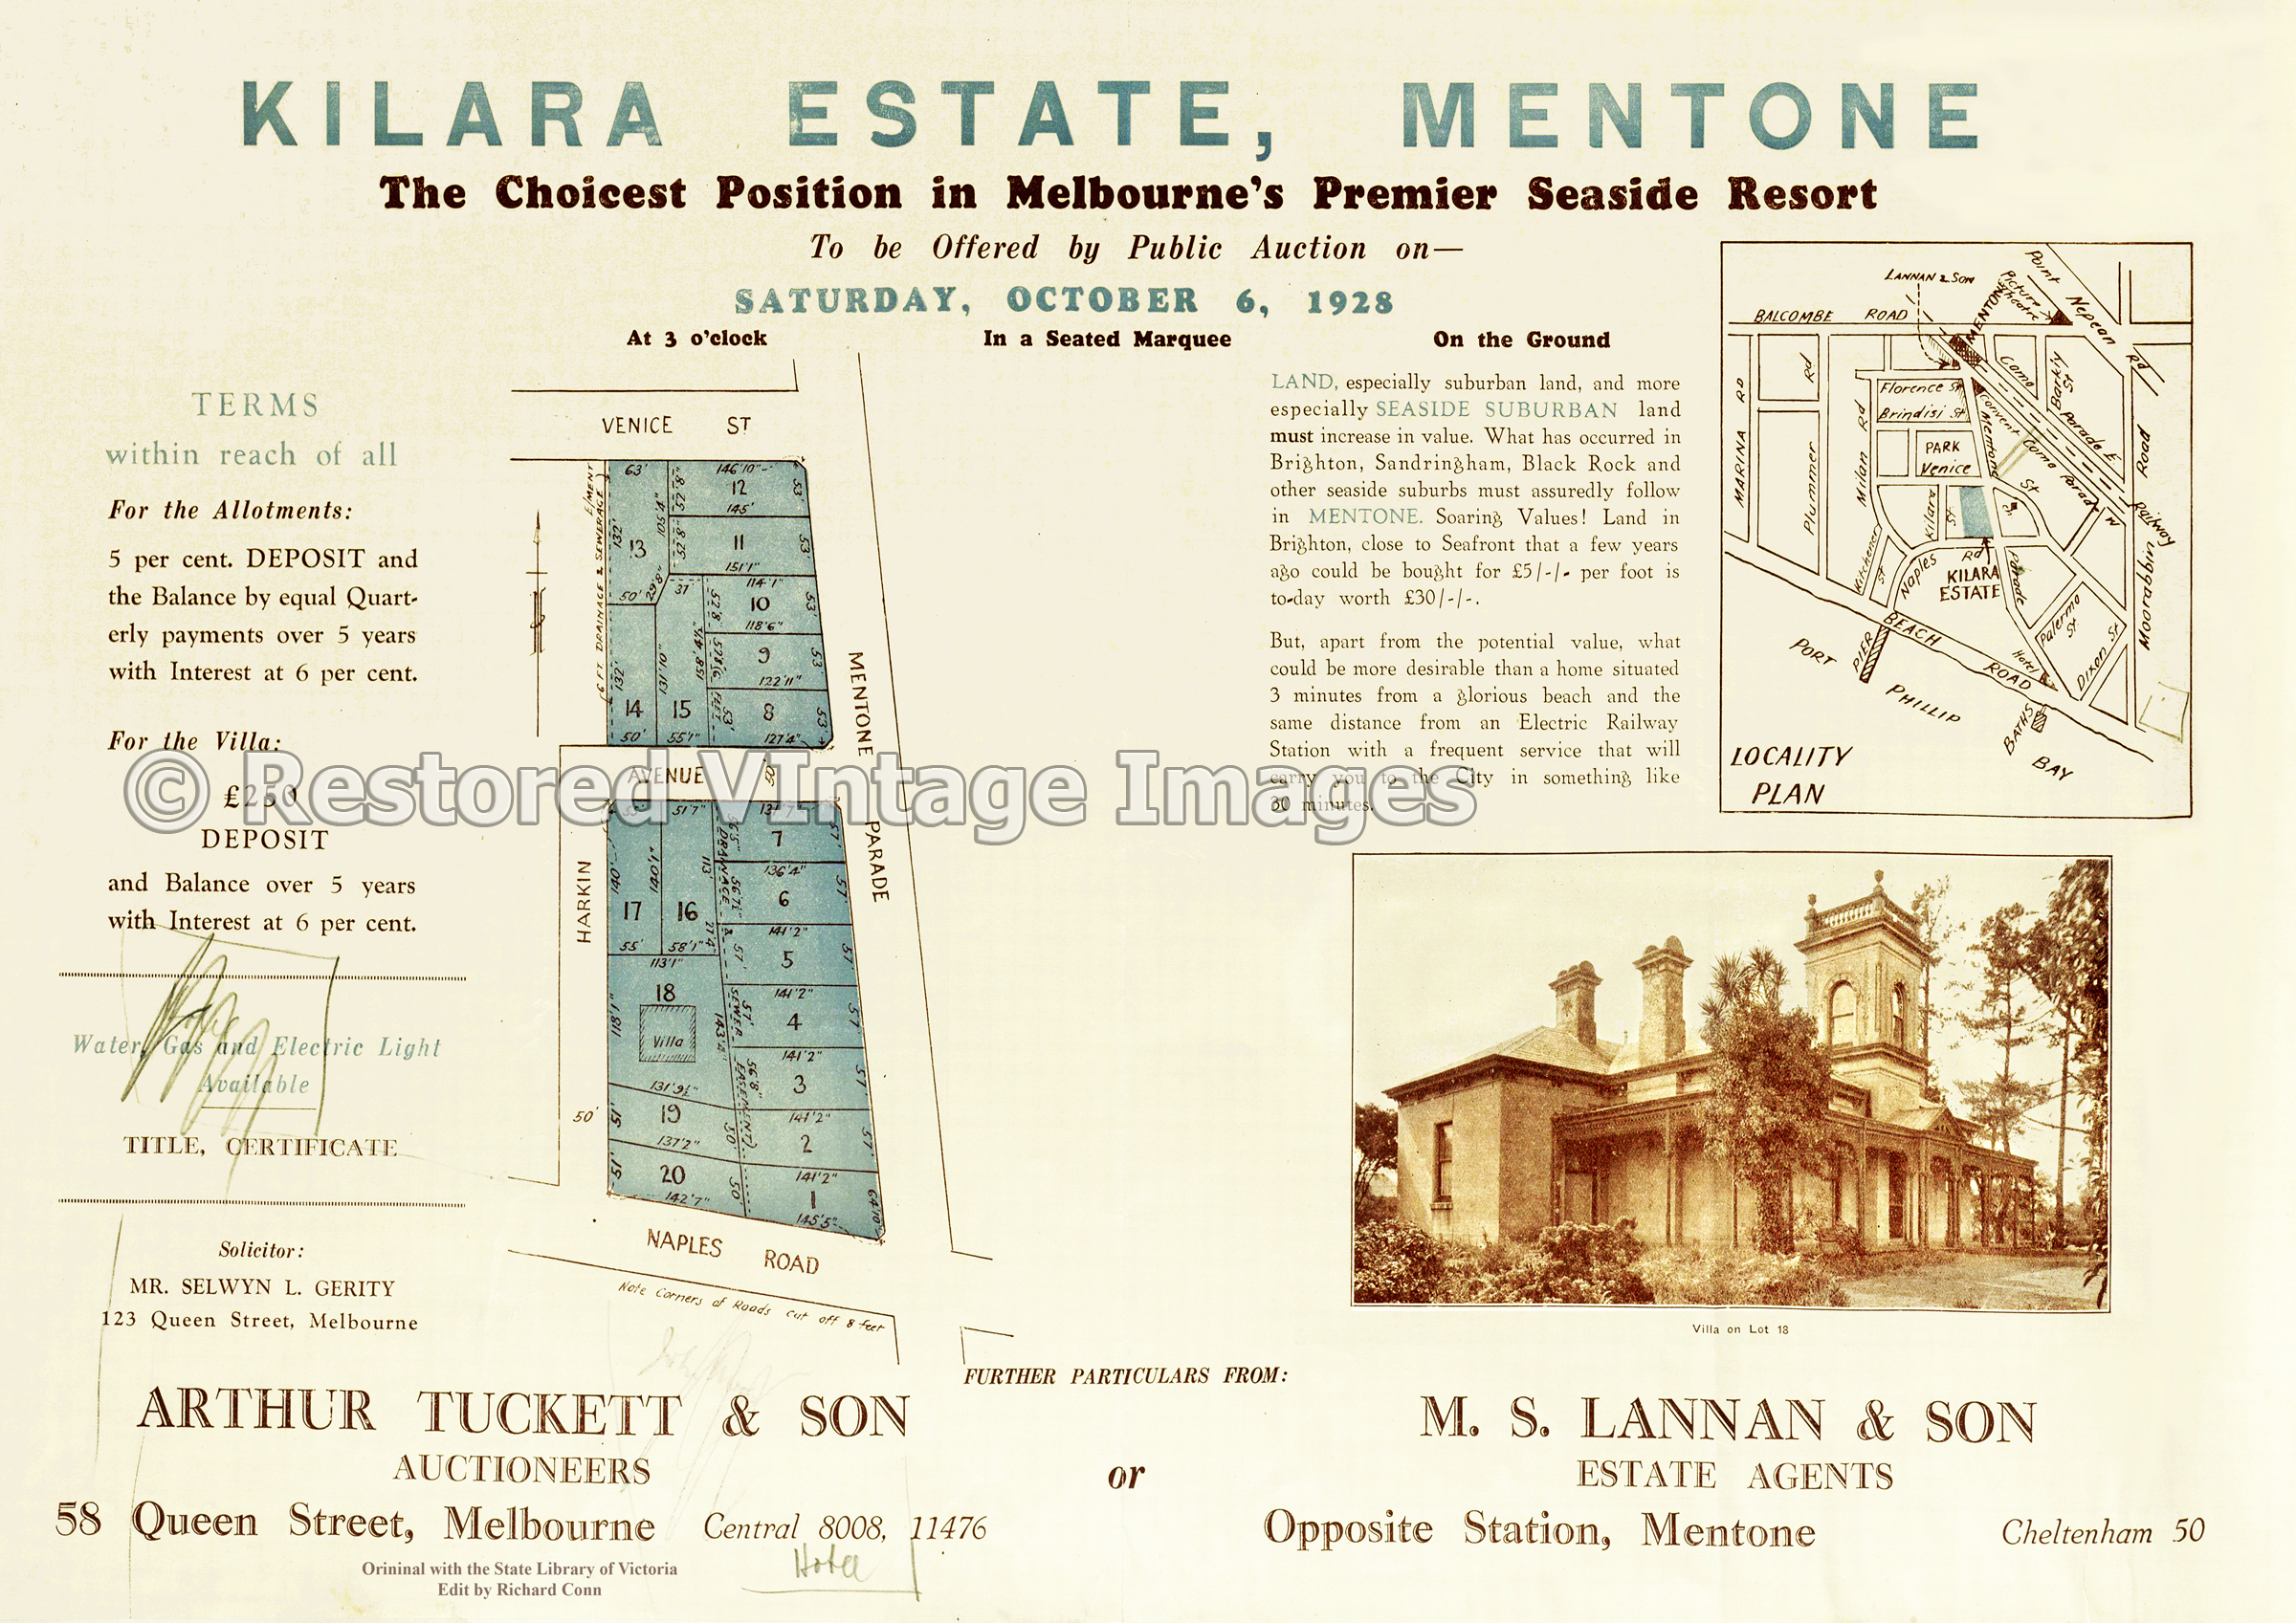 Kilara Estate 1928 – Mentone